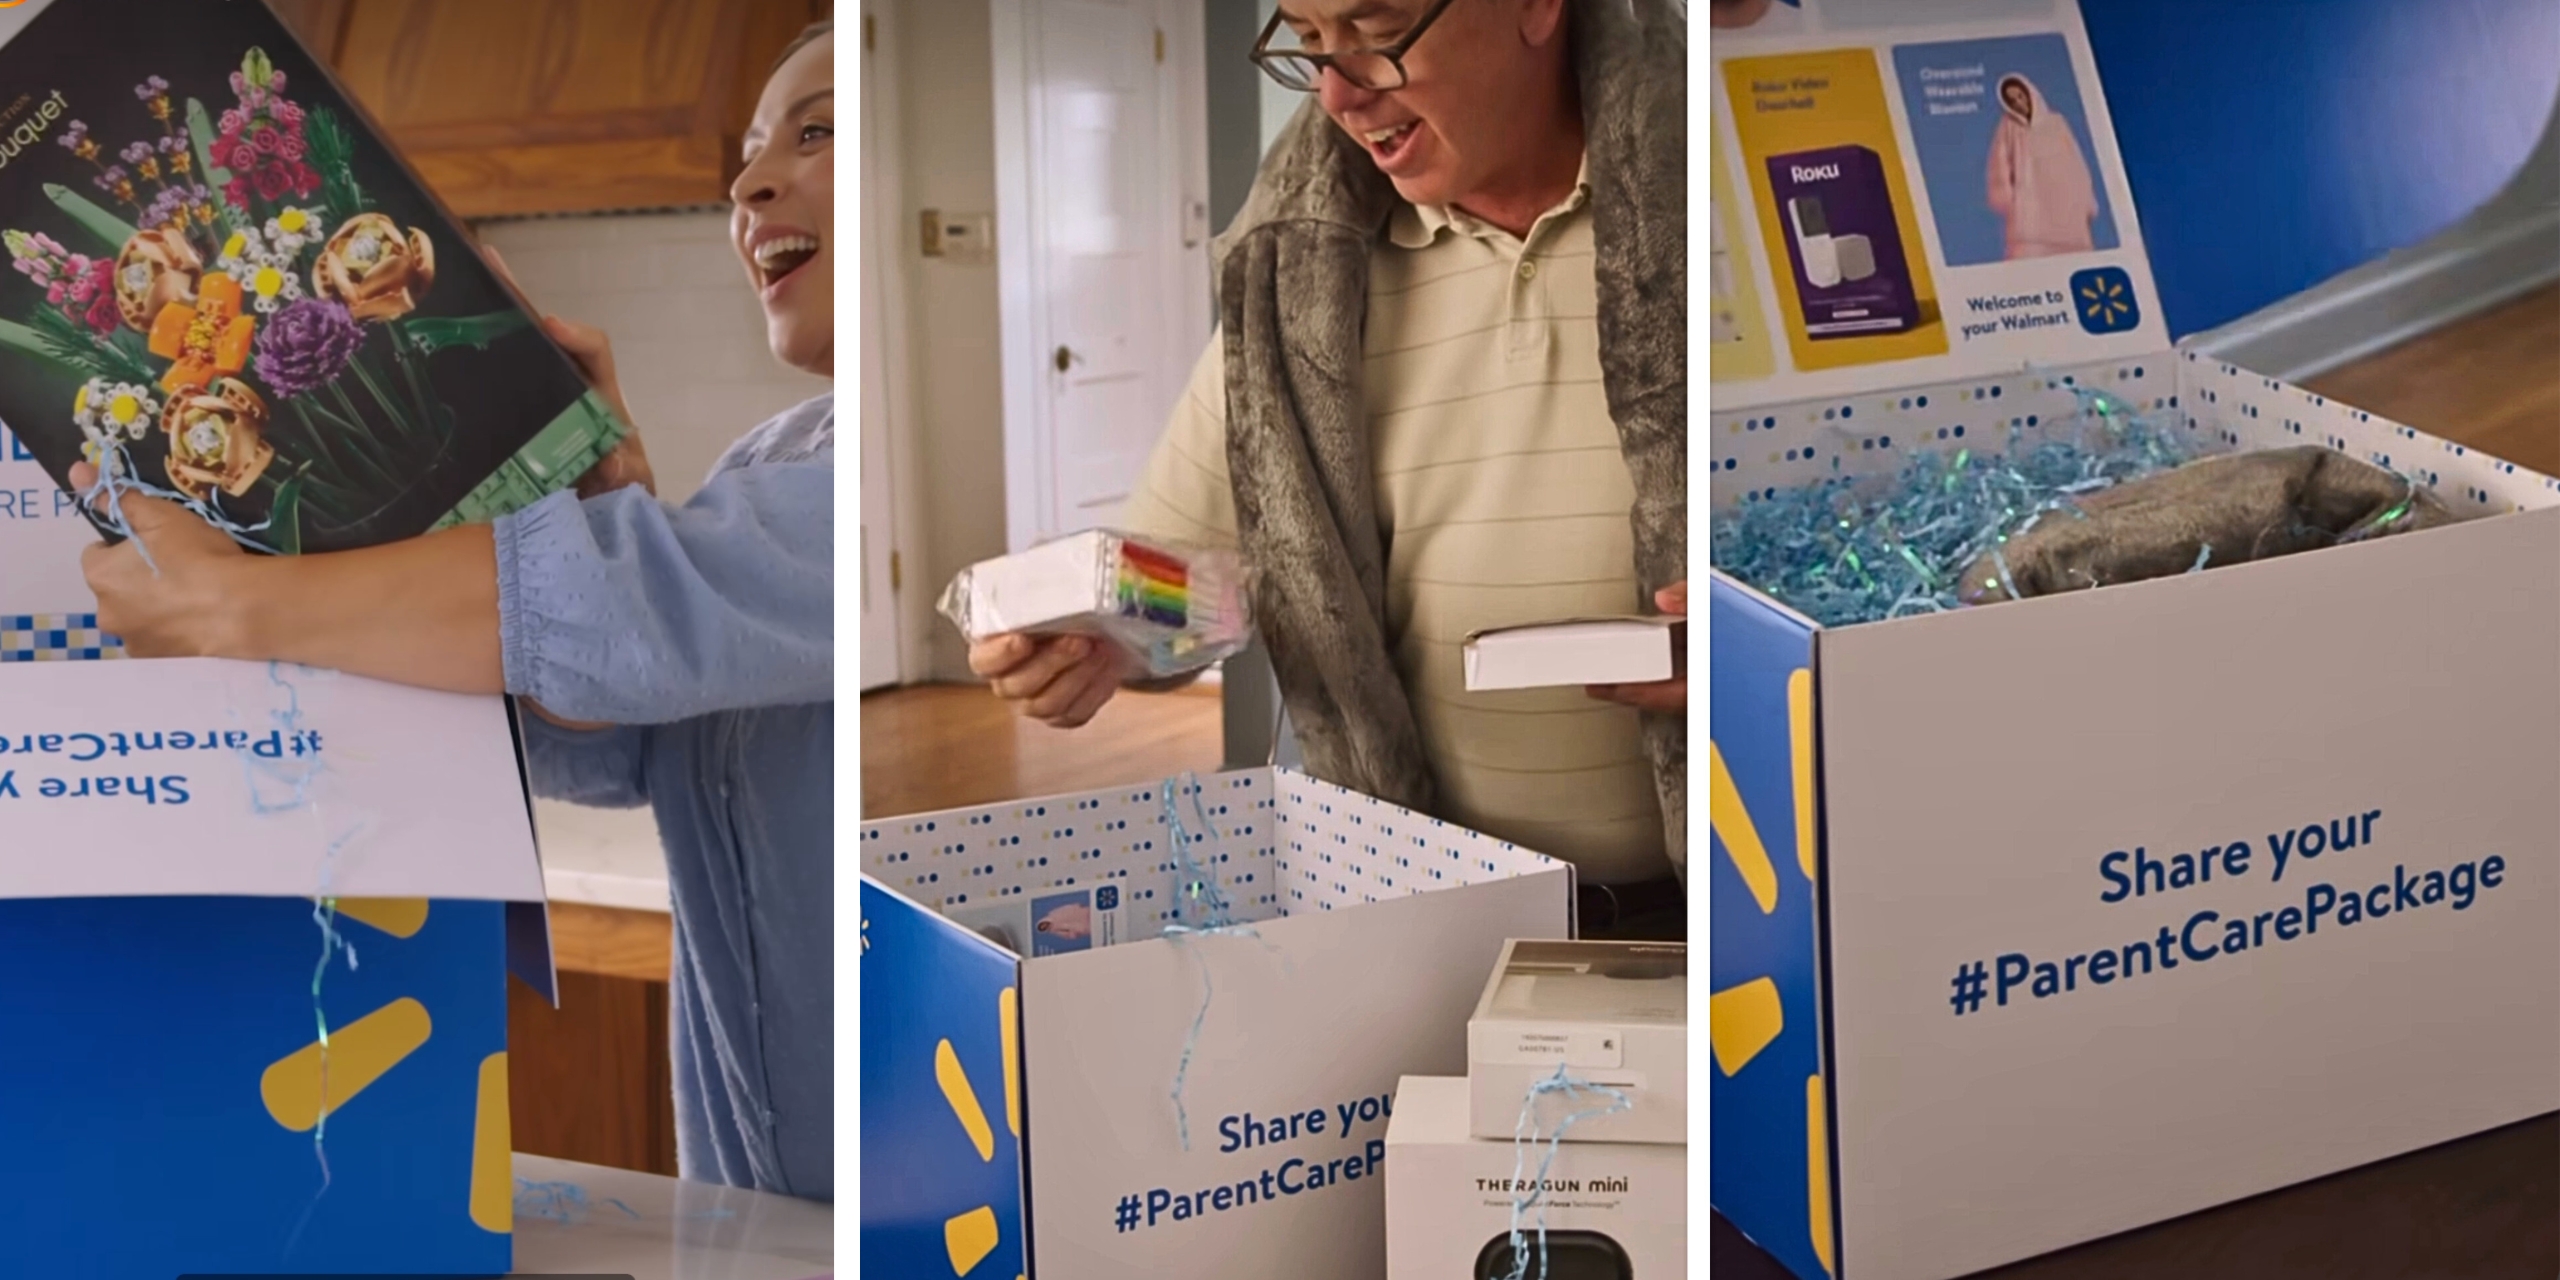 Walmart, Influencer kit packaging for Walmart's #ParentCarePackage social media campaign